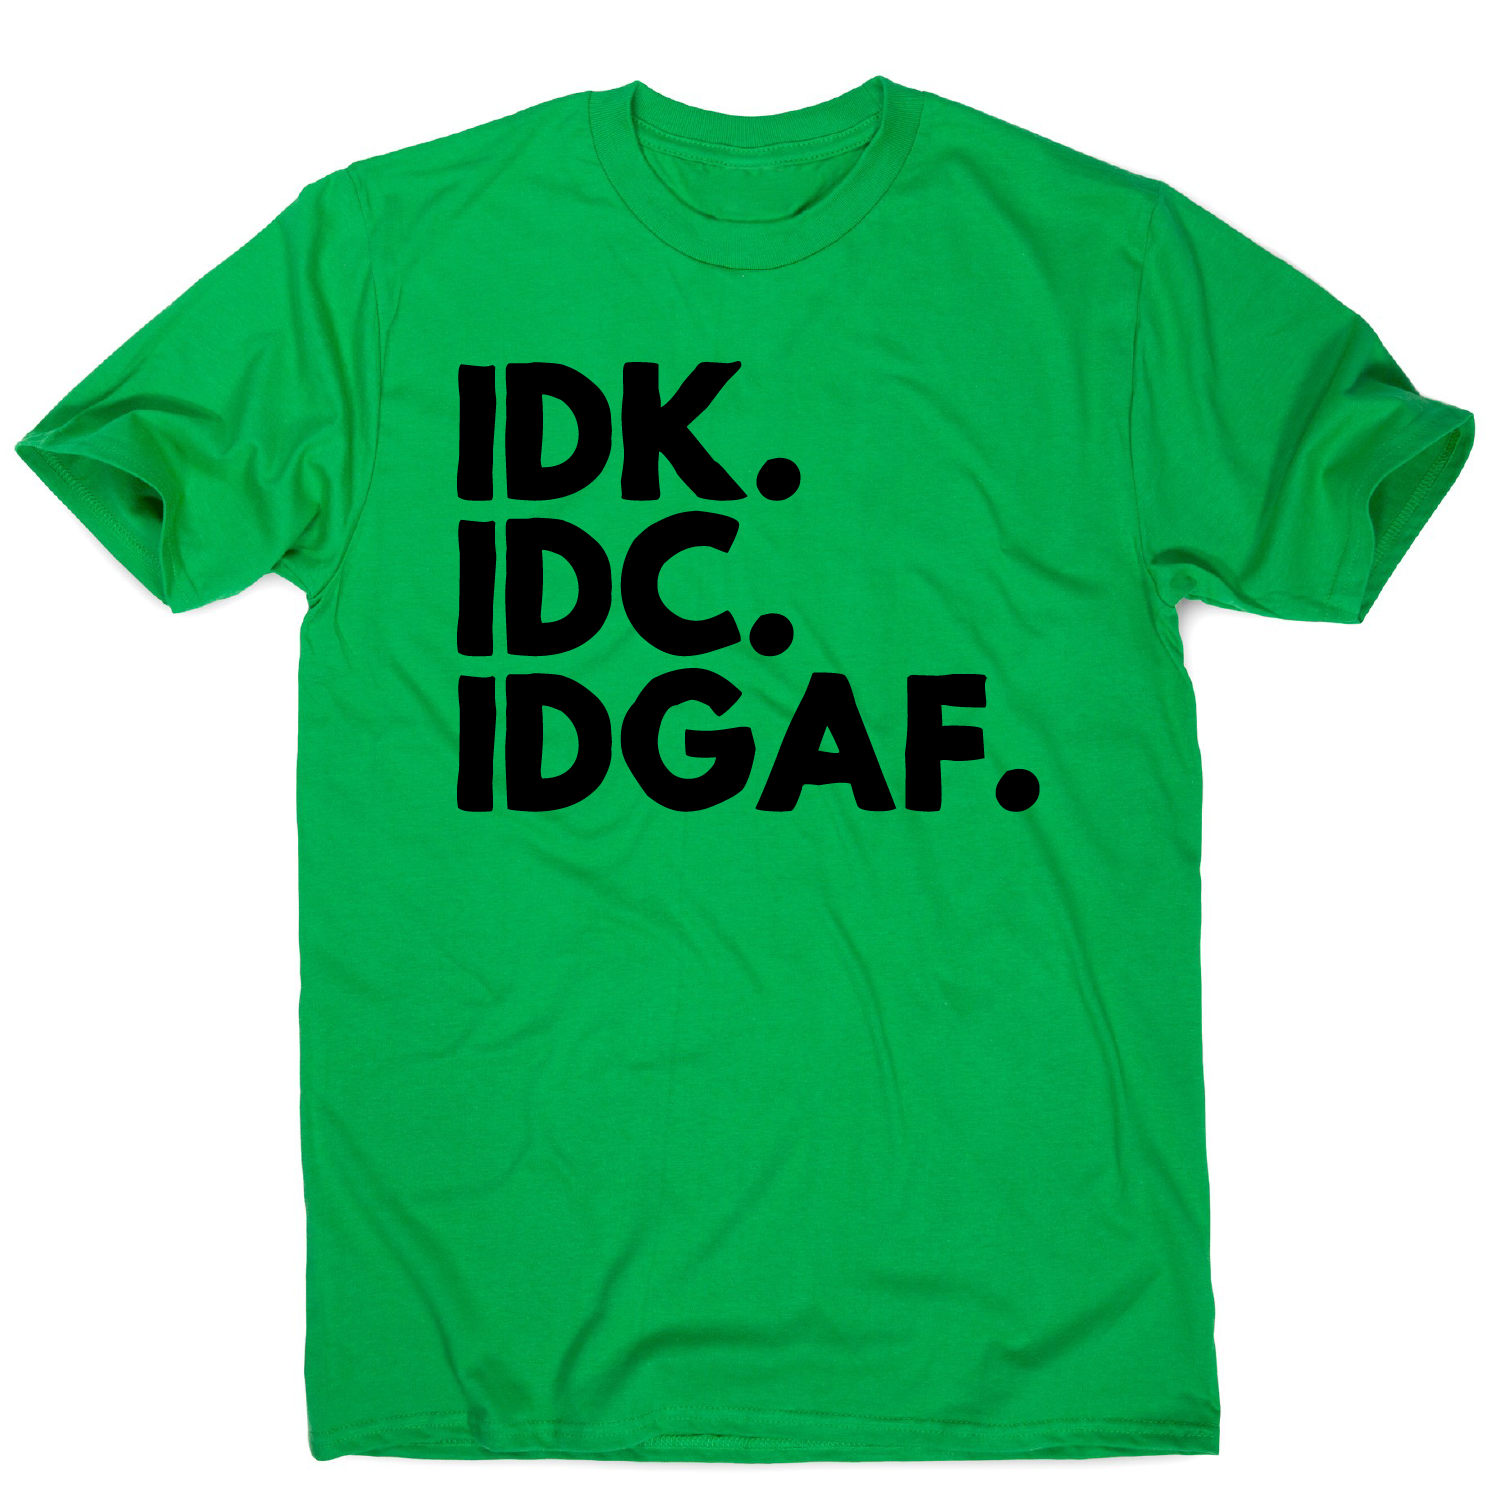 Idk.idc.idgaf - funny rude t-shirt men's– Graphic Gear